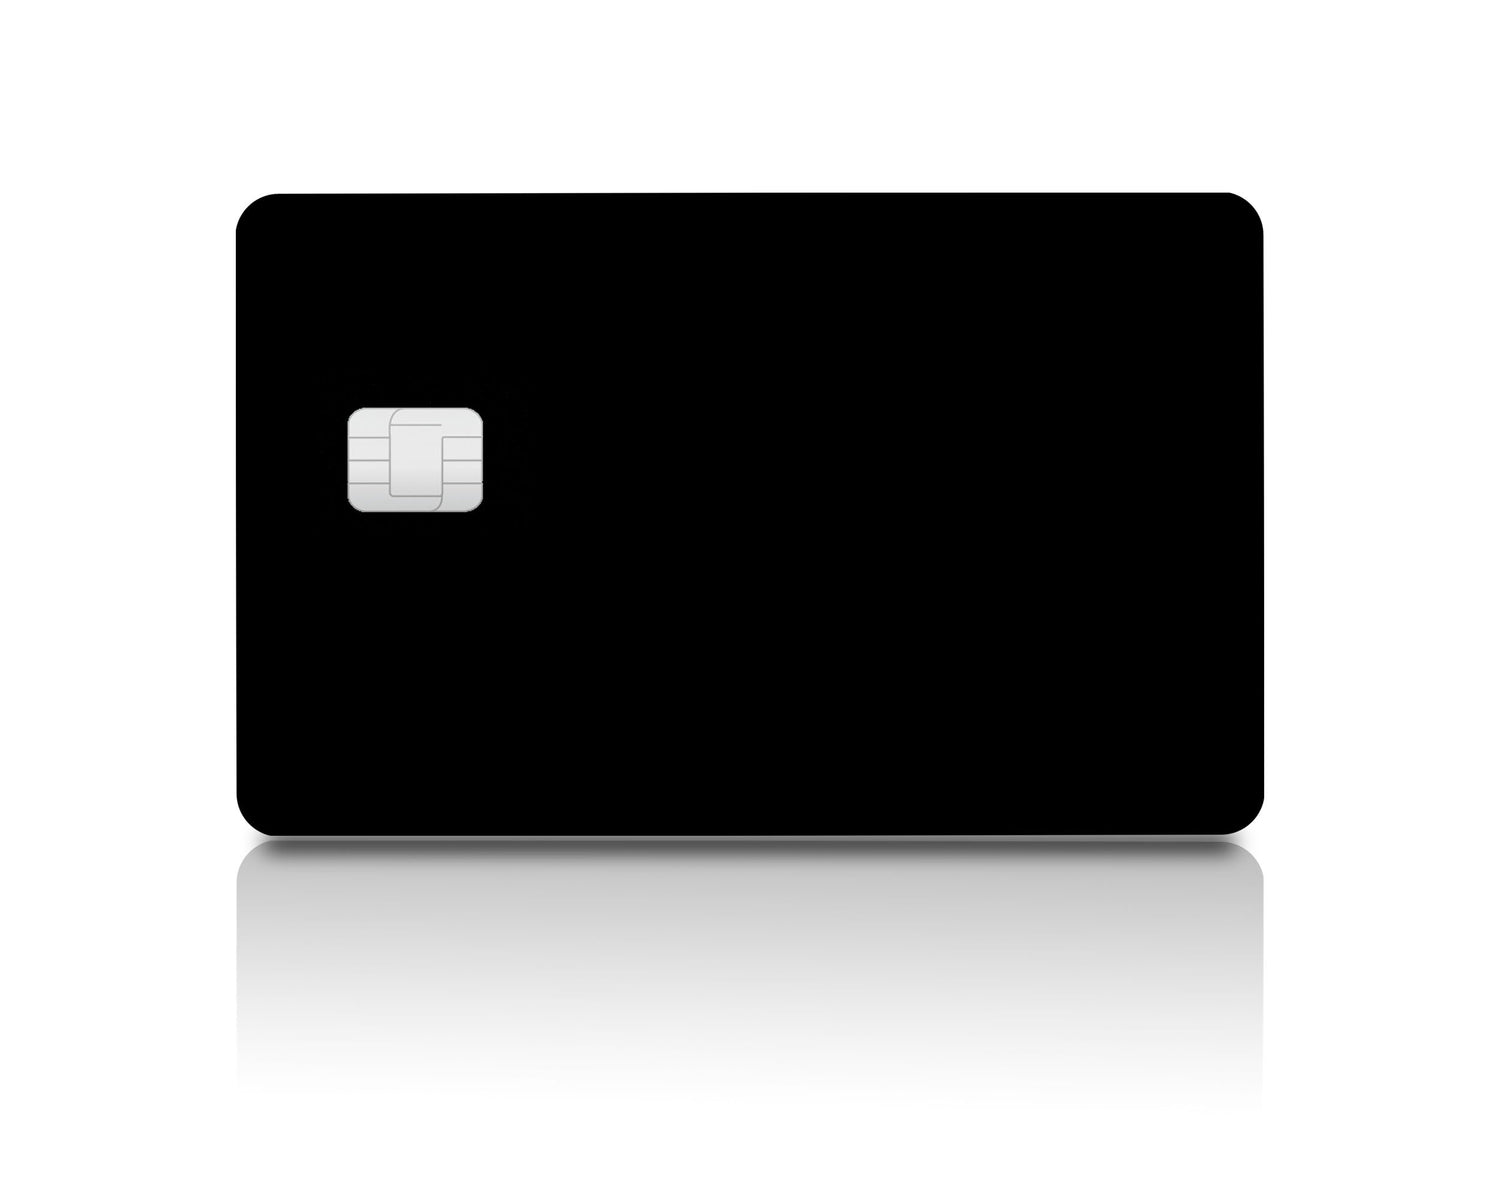 Wrapcart 8 cm Black lV Debit/Credit Card Skin Window Cut - Square